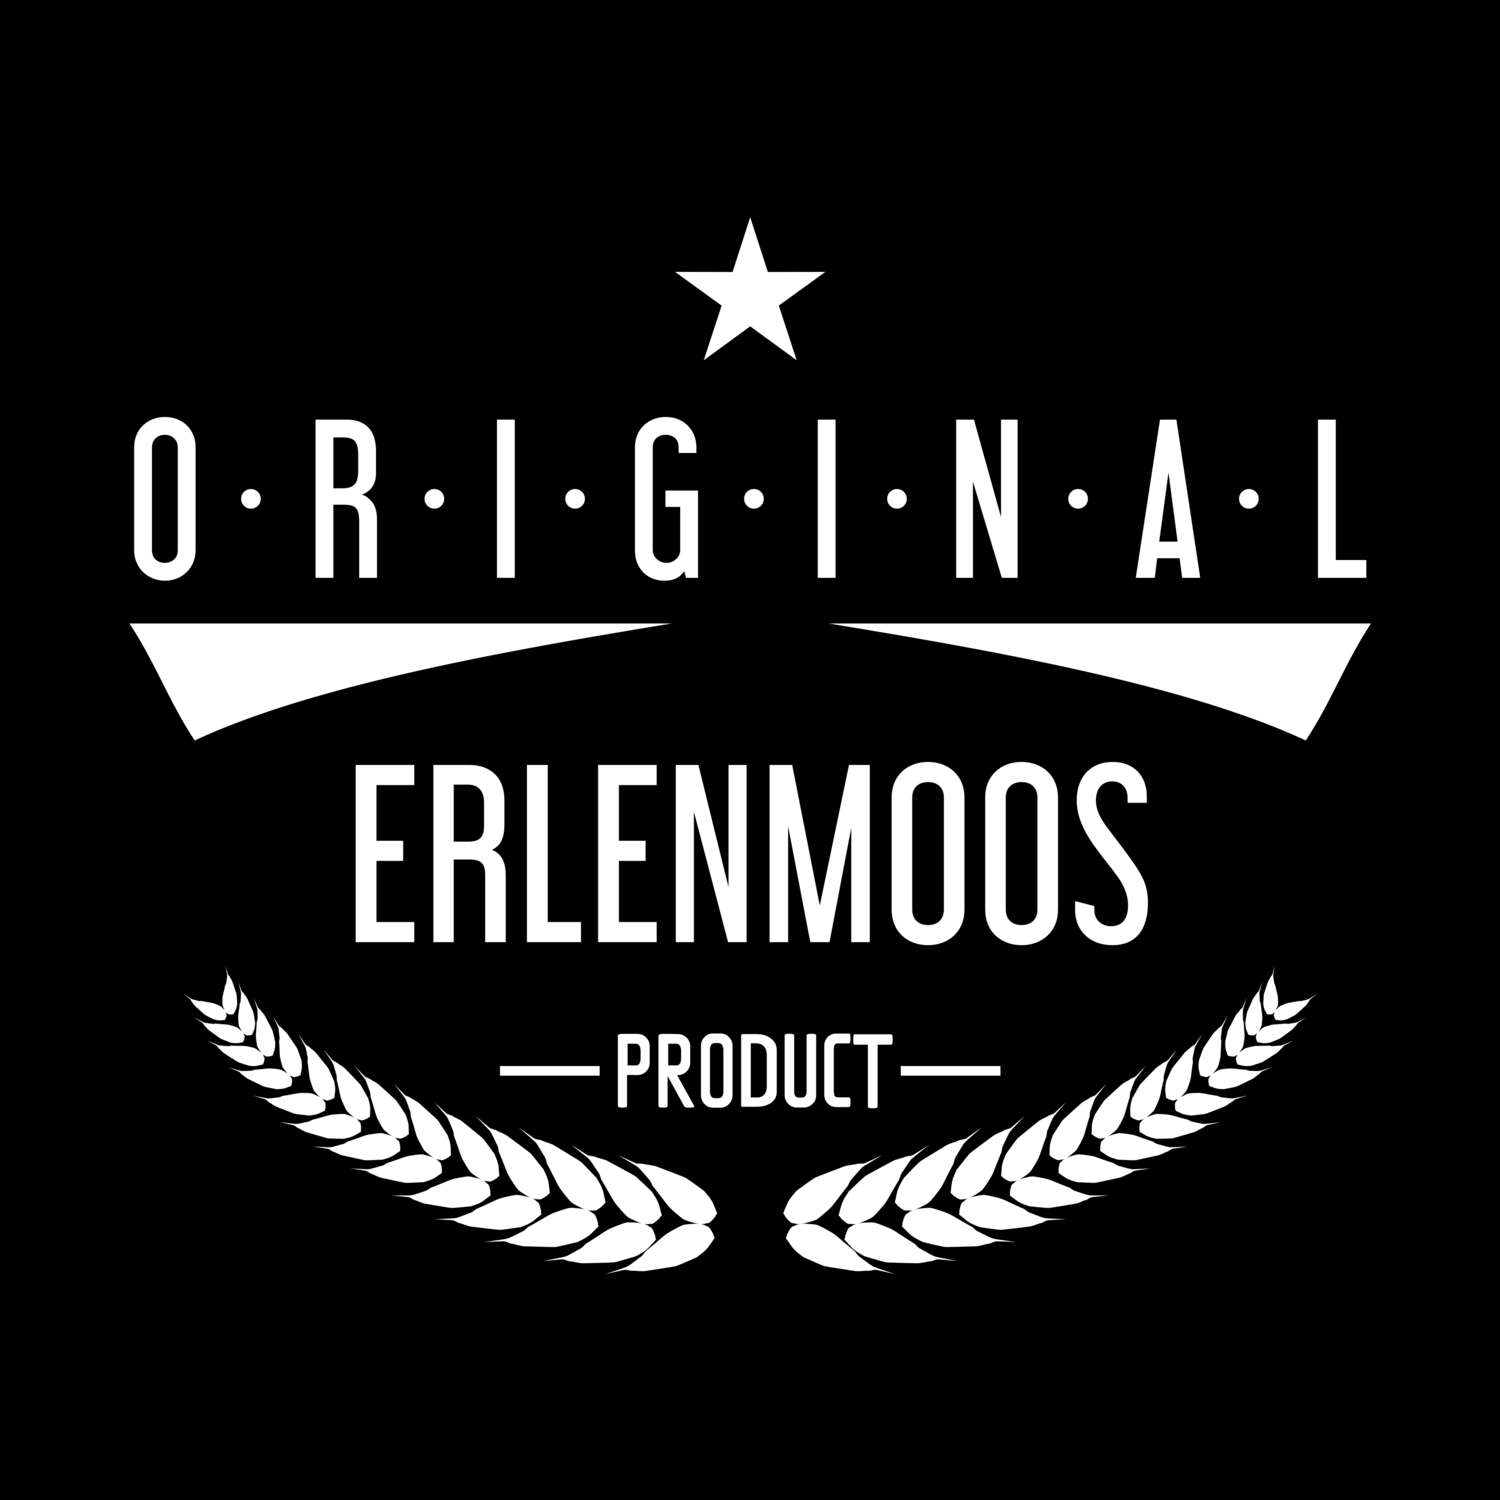 Erlenmoos T-Shirt »Original Product«